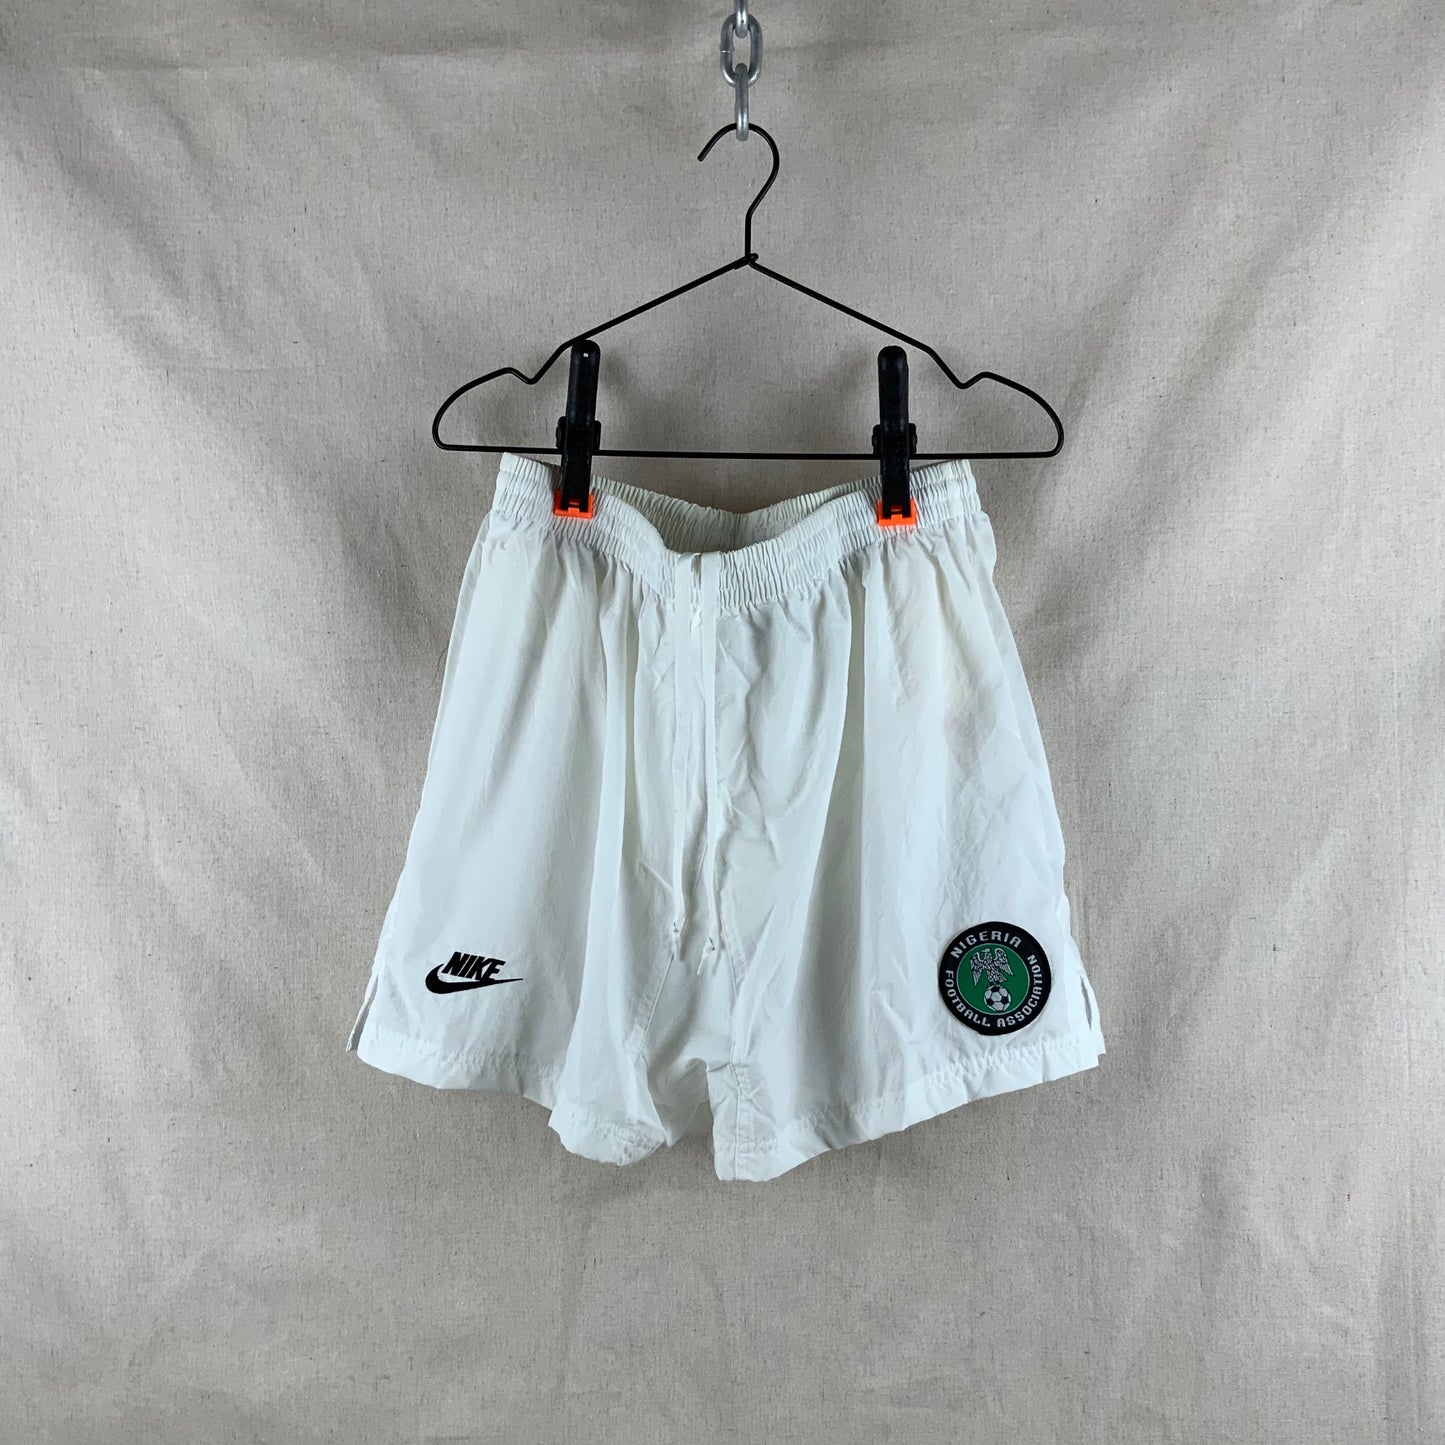 Nigeria Shorts 1996-98